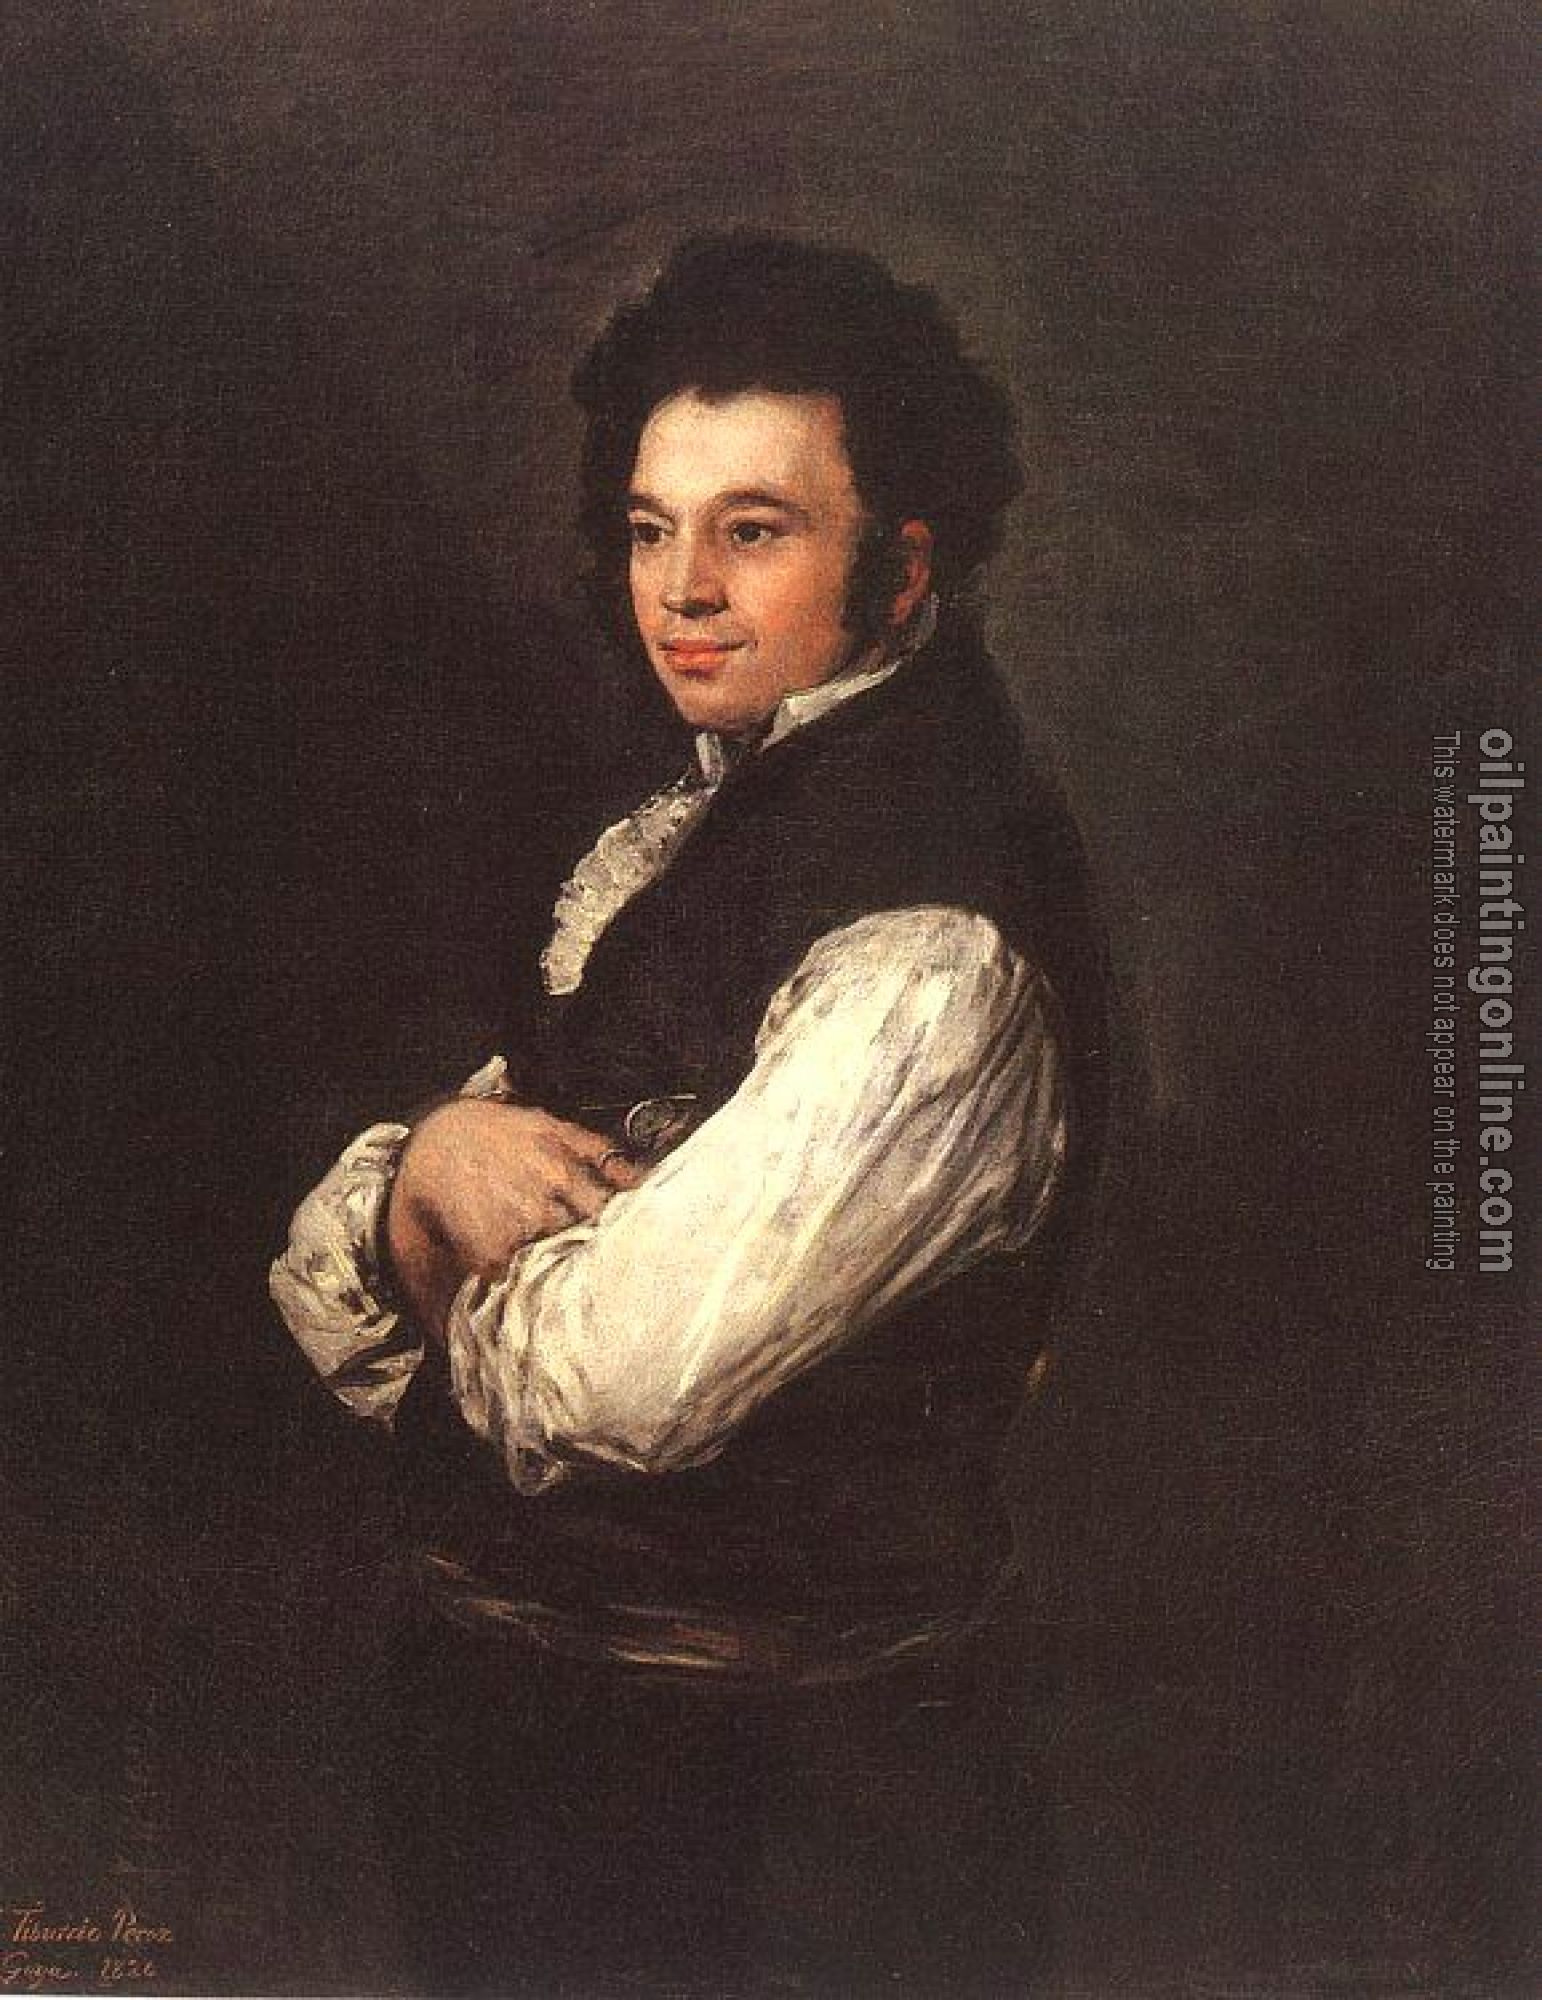 Goya, Francisco de - The Architect Don Tiburcio Perezy Cuervo